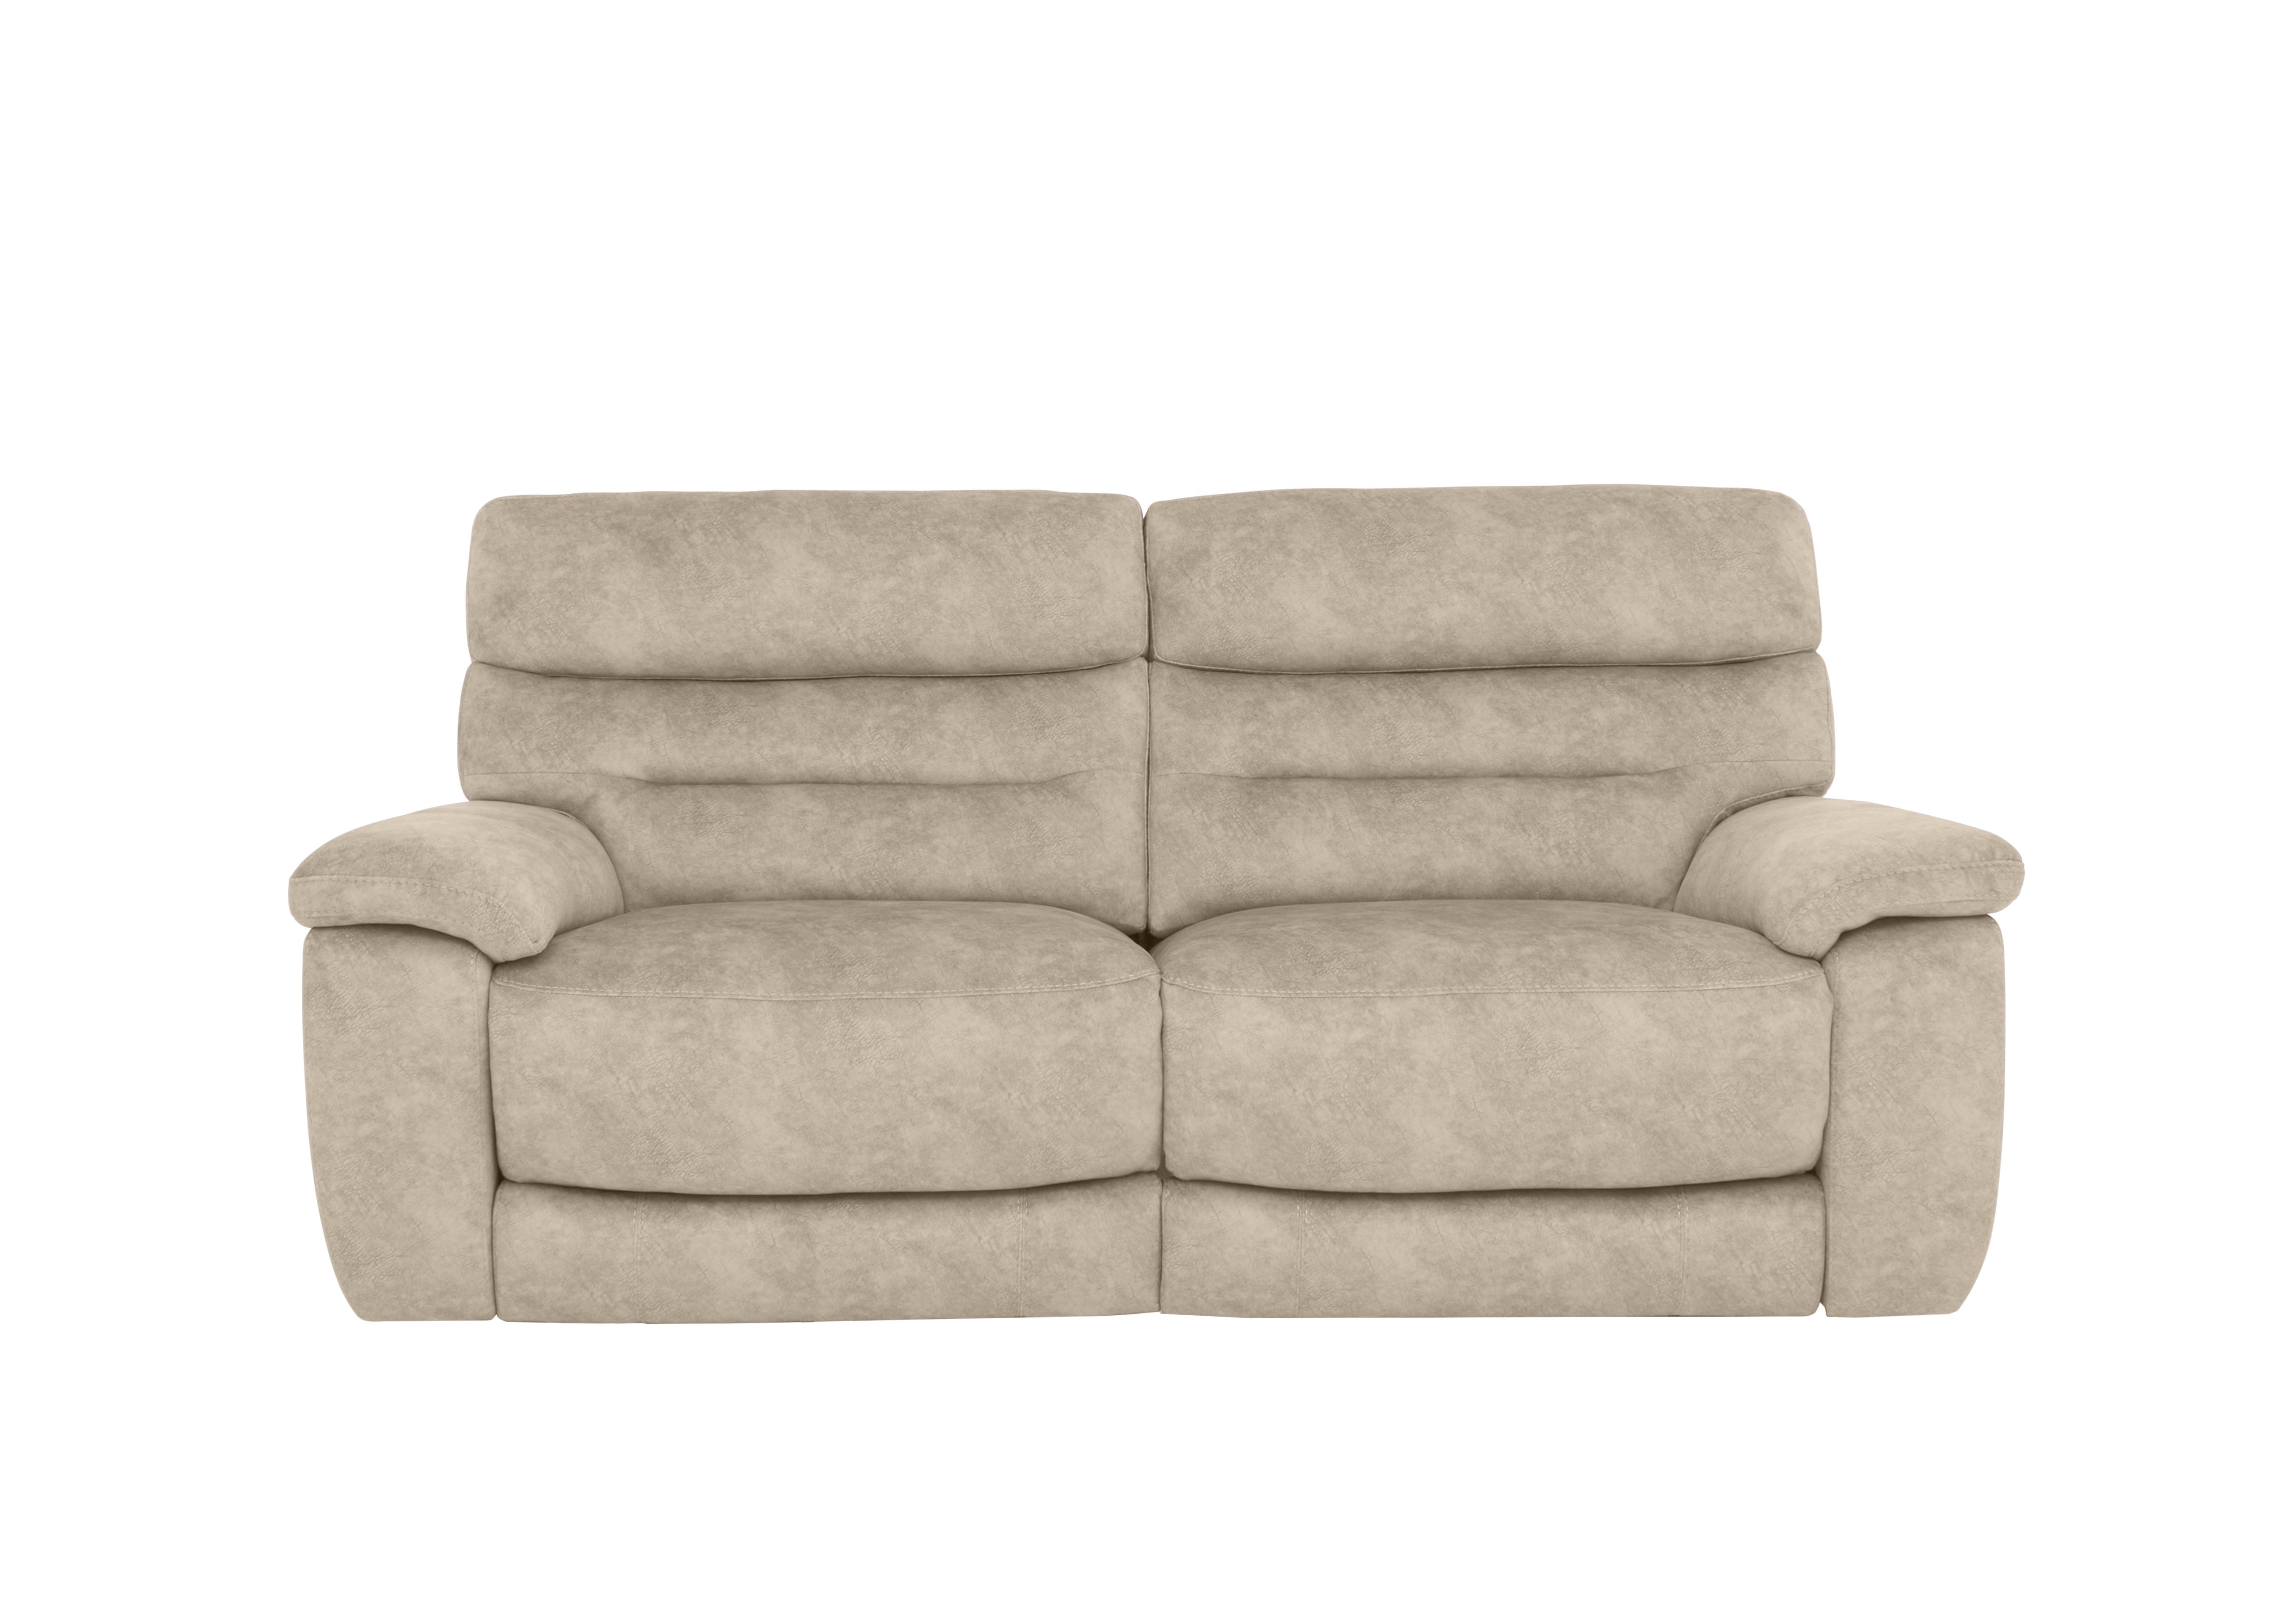 Nimbus 3 Seater Fabric Sofa in Bfa-Bnn-R26 Cream on Furniture Village